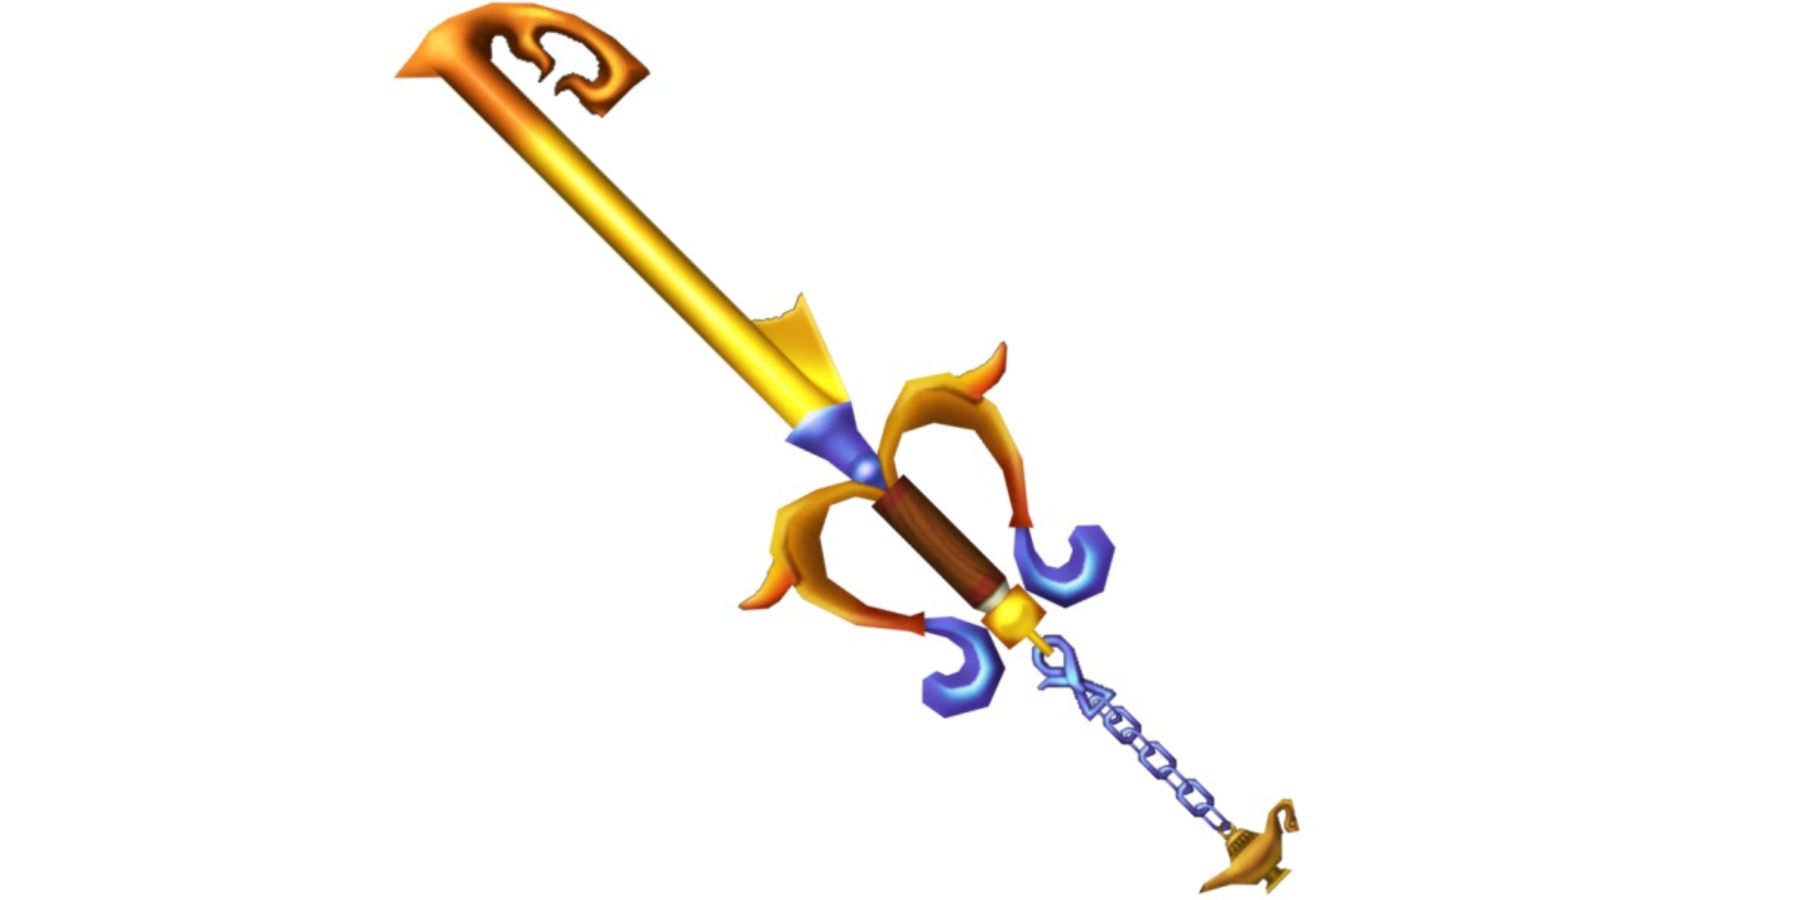 The Three Wishes Keyblade in Kingdom Hearts